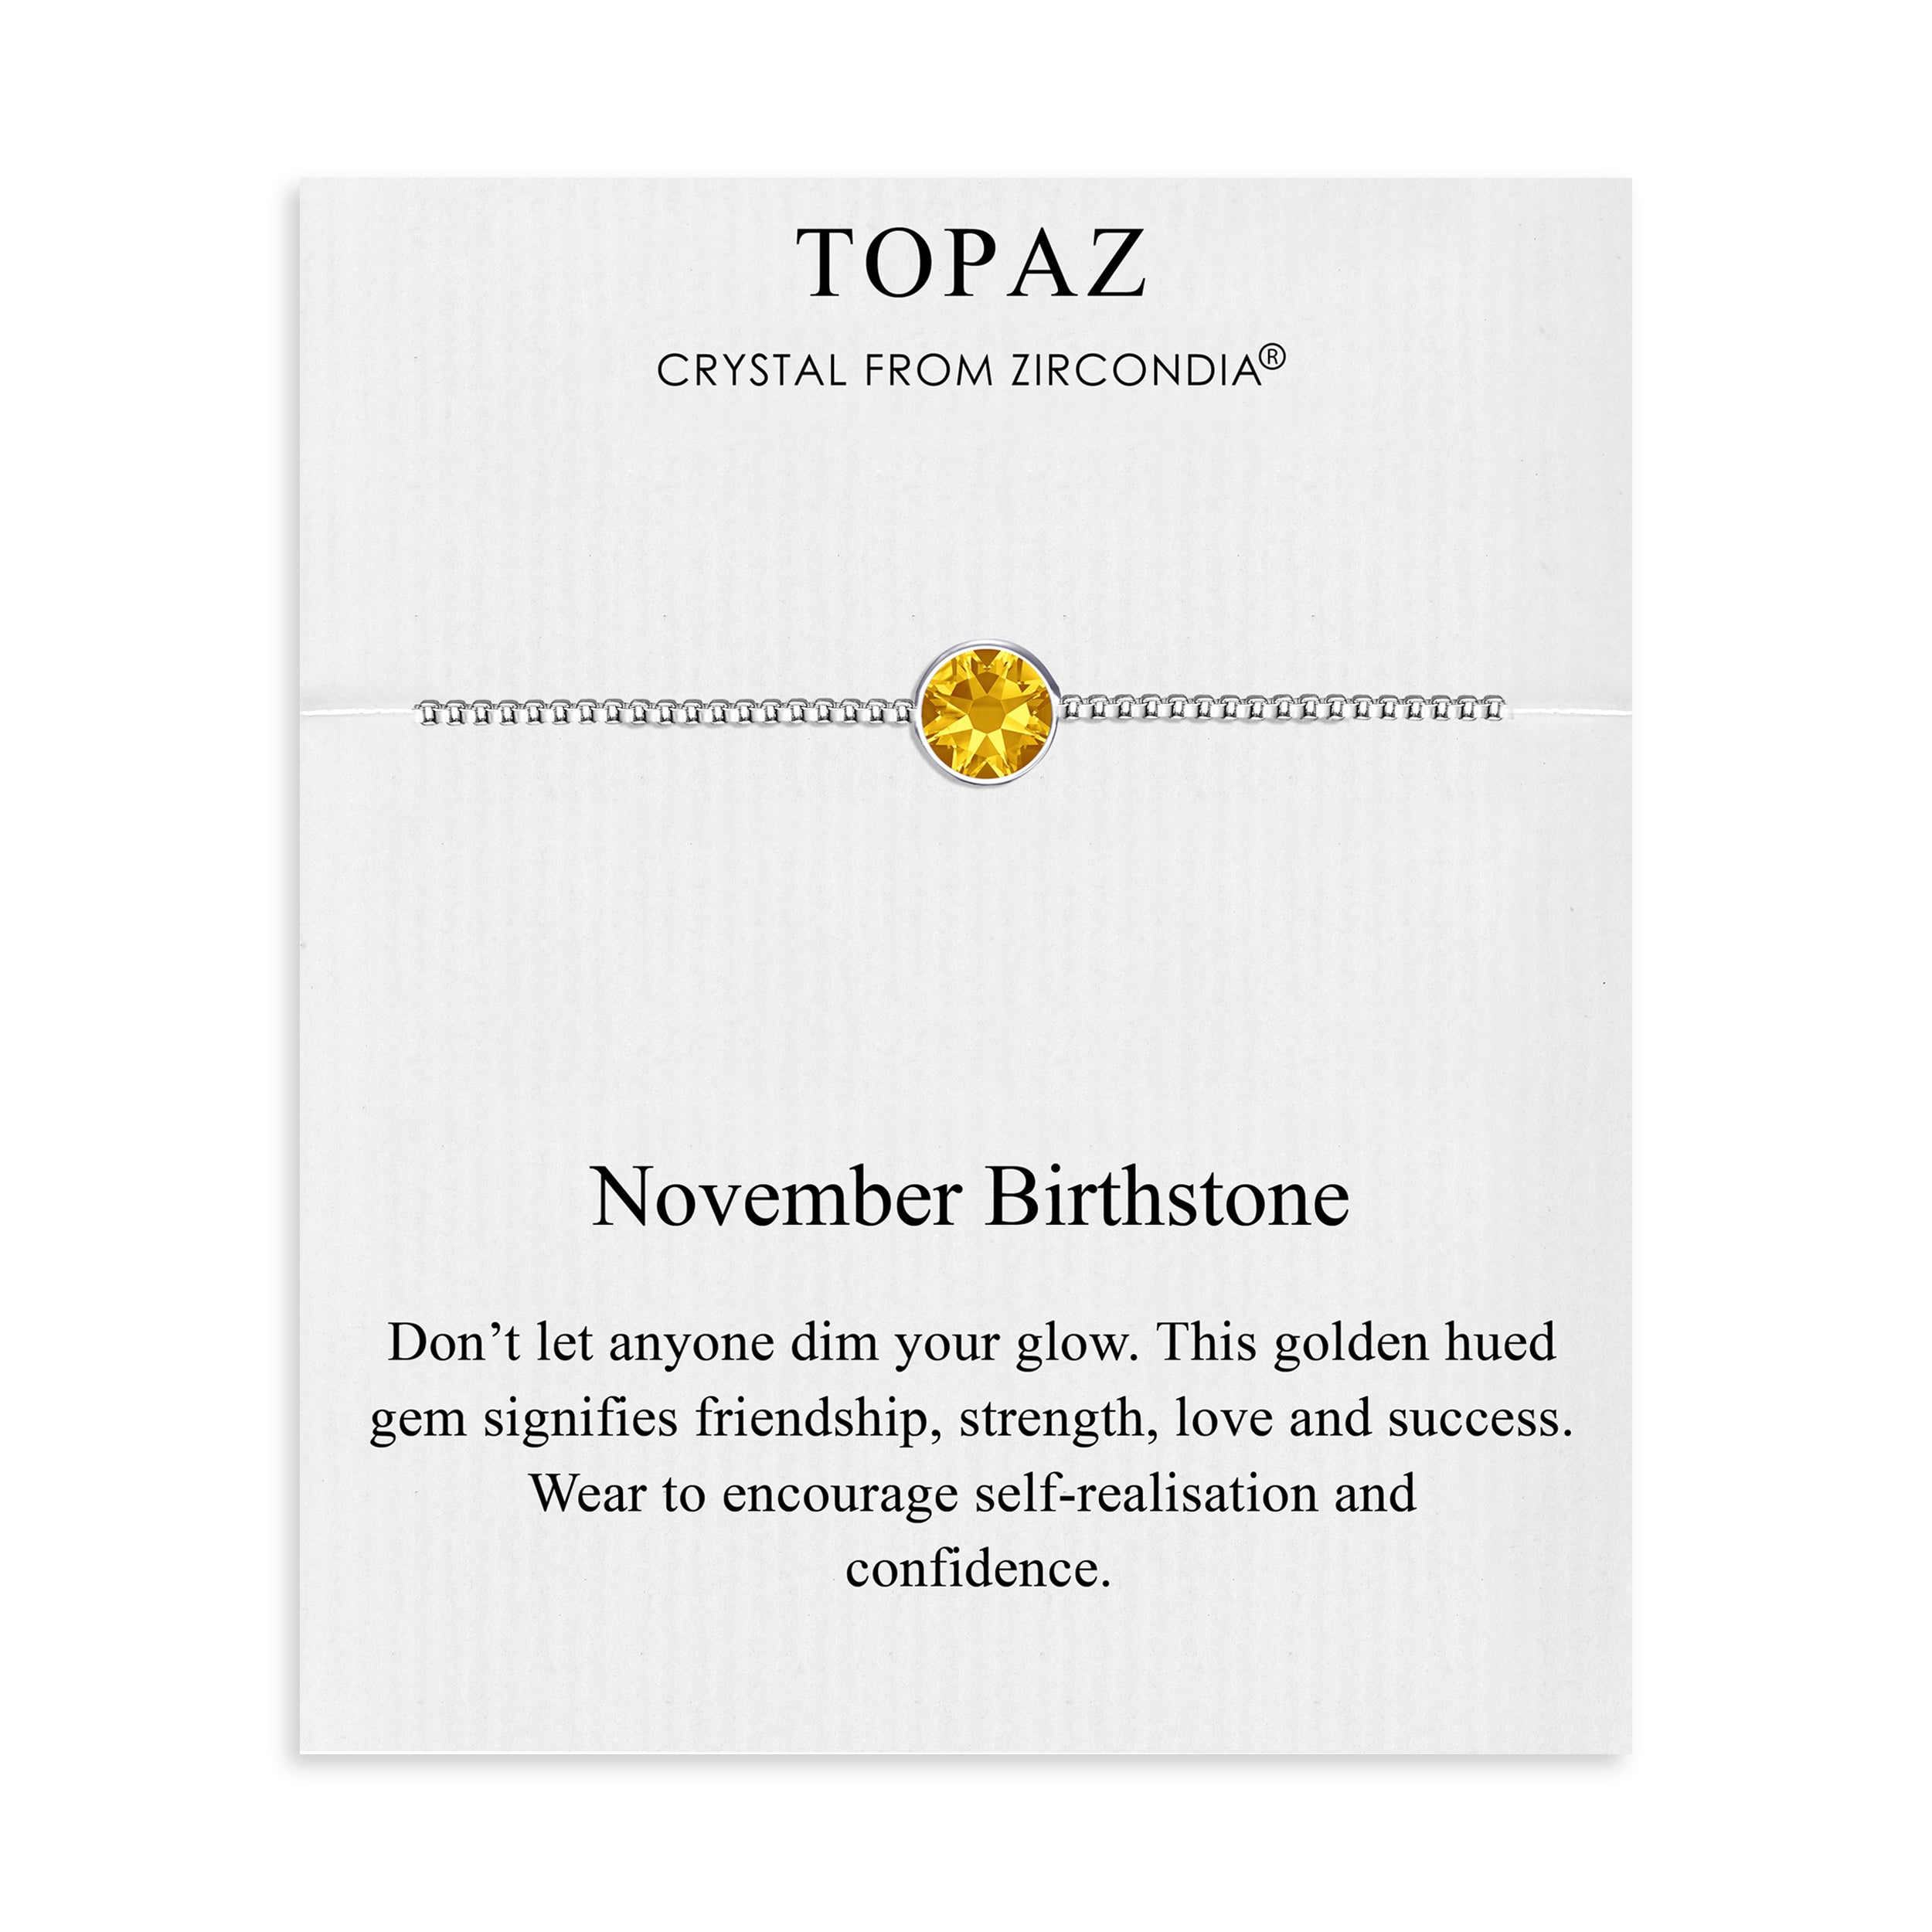 November (Topaz) Birthstone Bracelet Created with Zircondia® Crystals by Philip Jones Jewellery